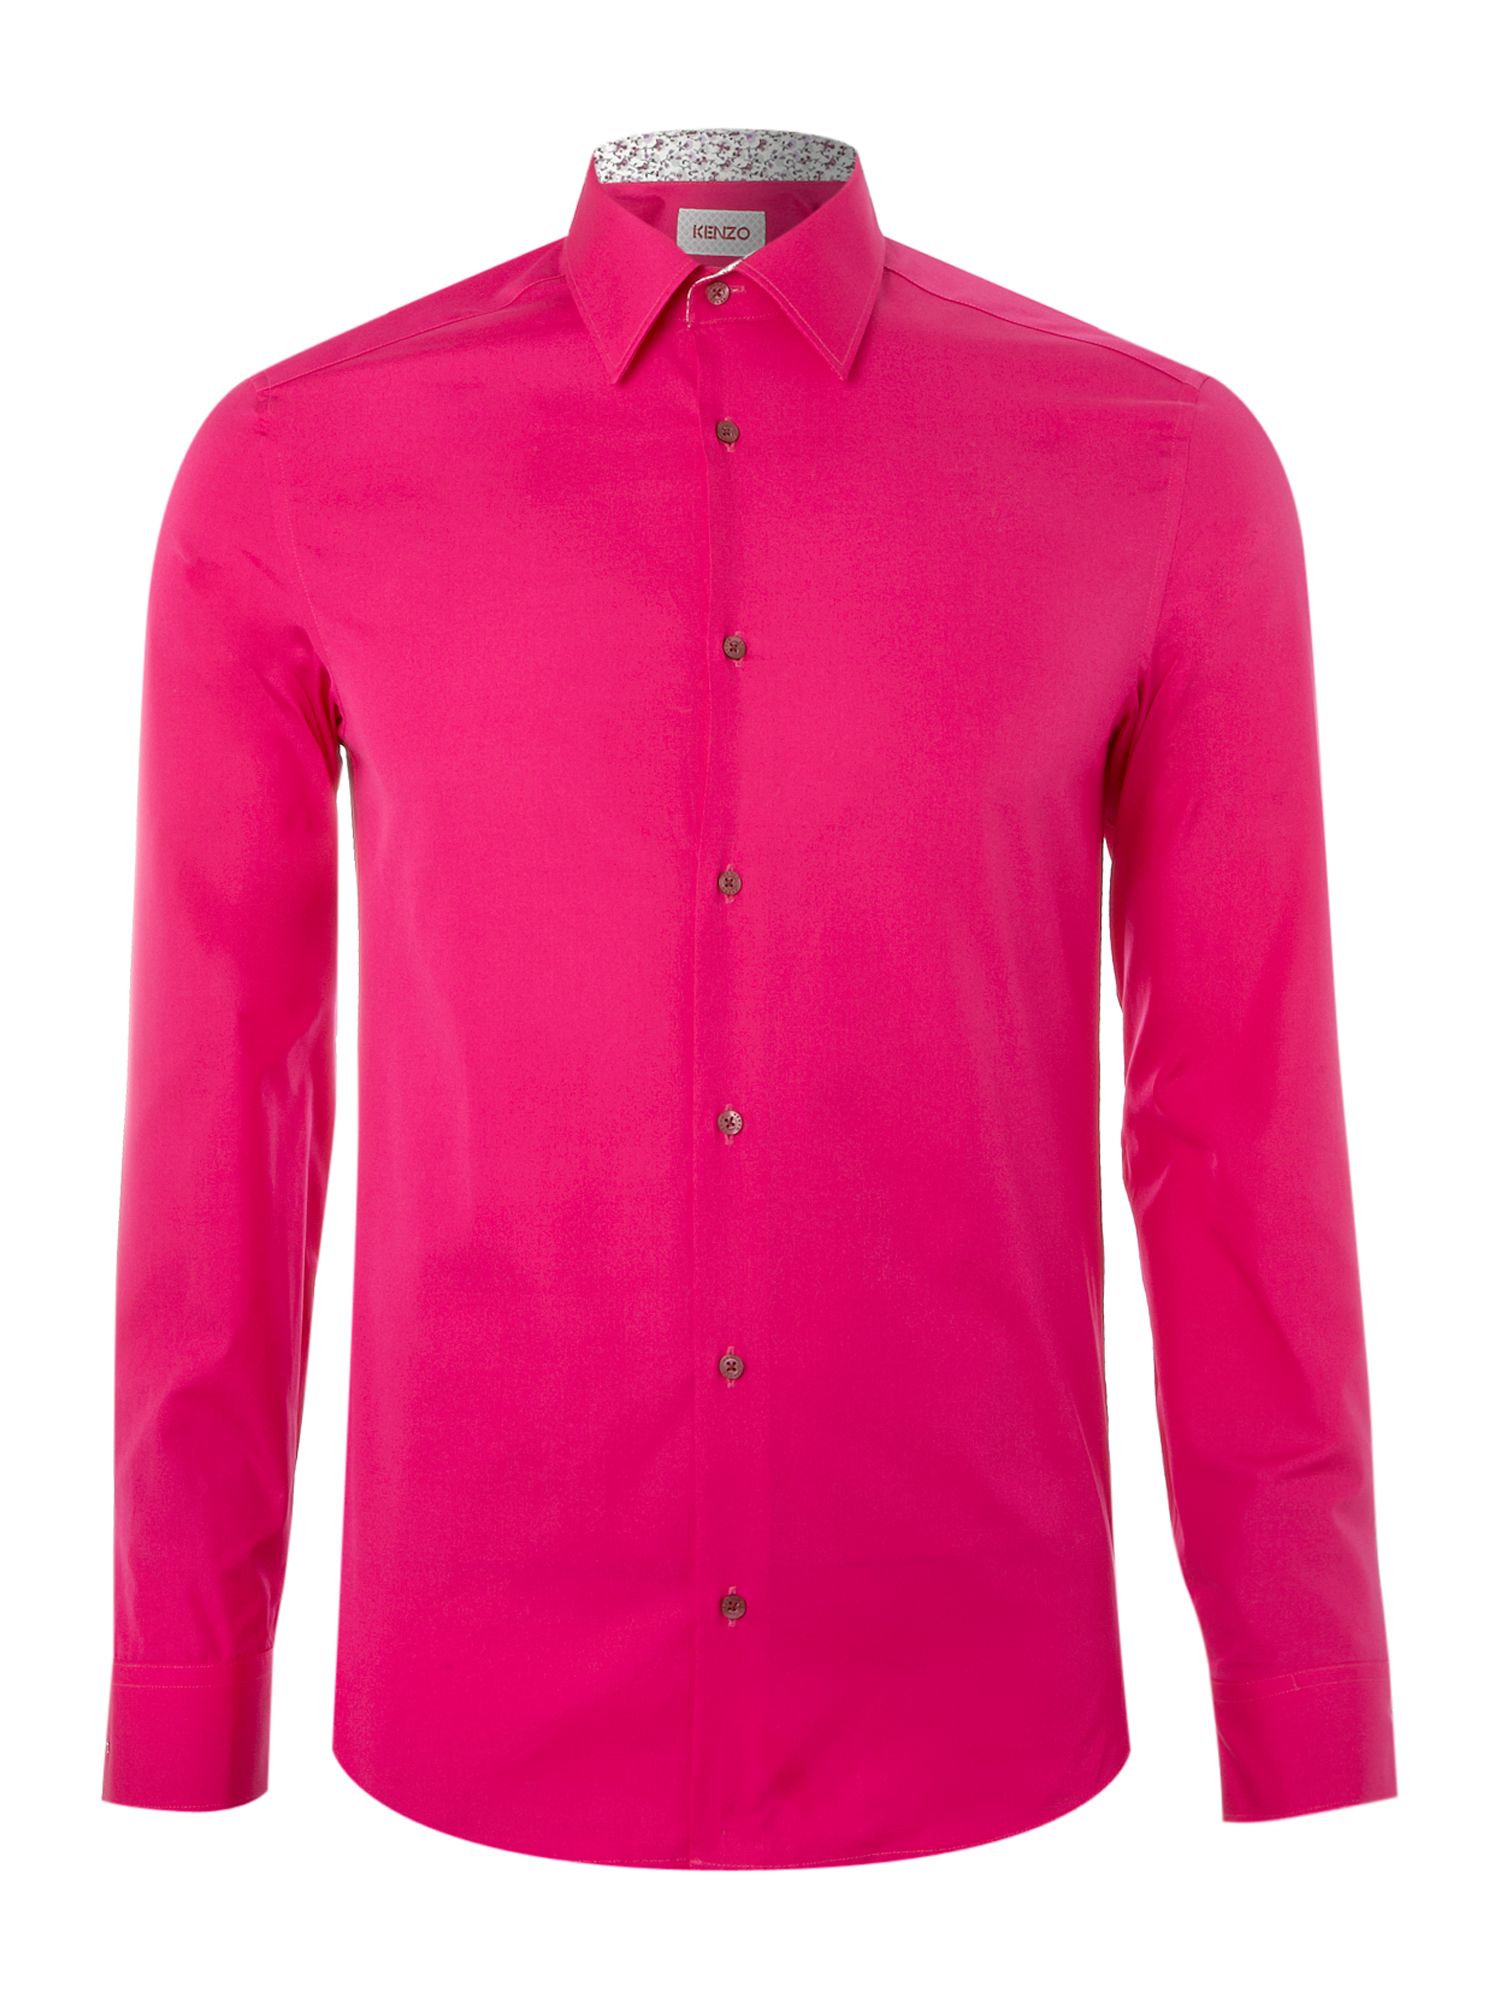 Kenzo Long Sleeven Bright Poplin Shirt in Pink for Men | Lyst